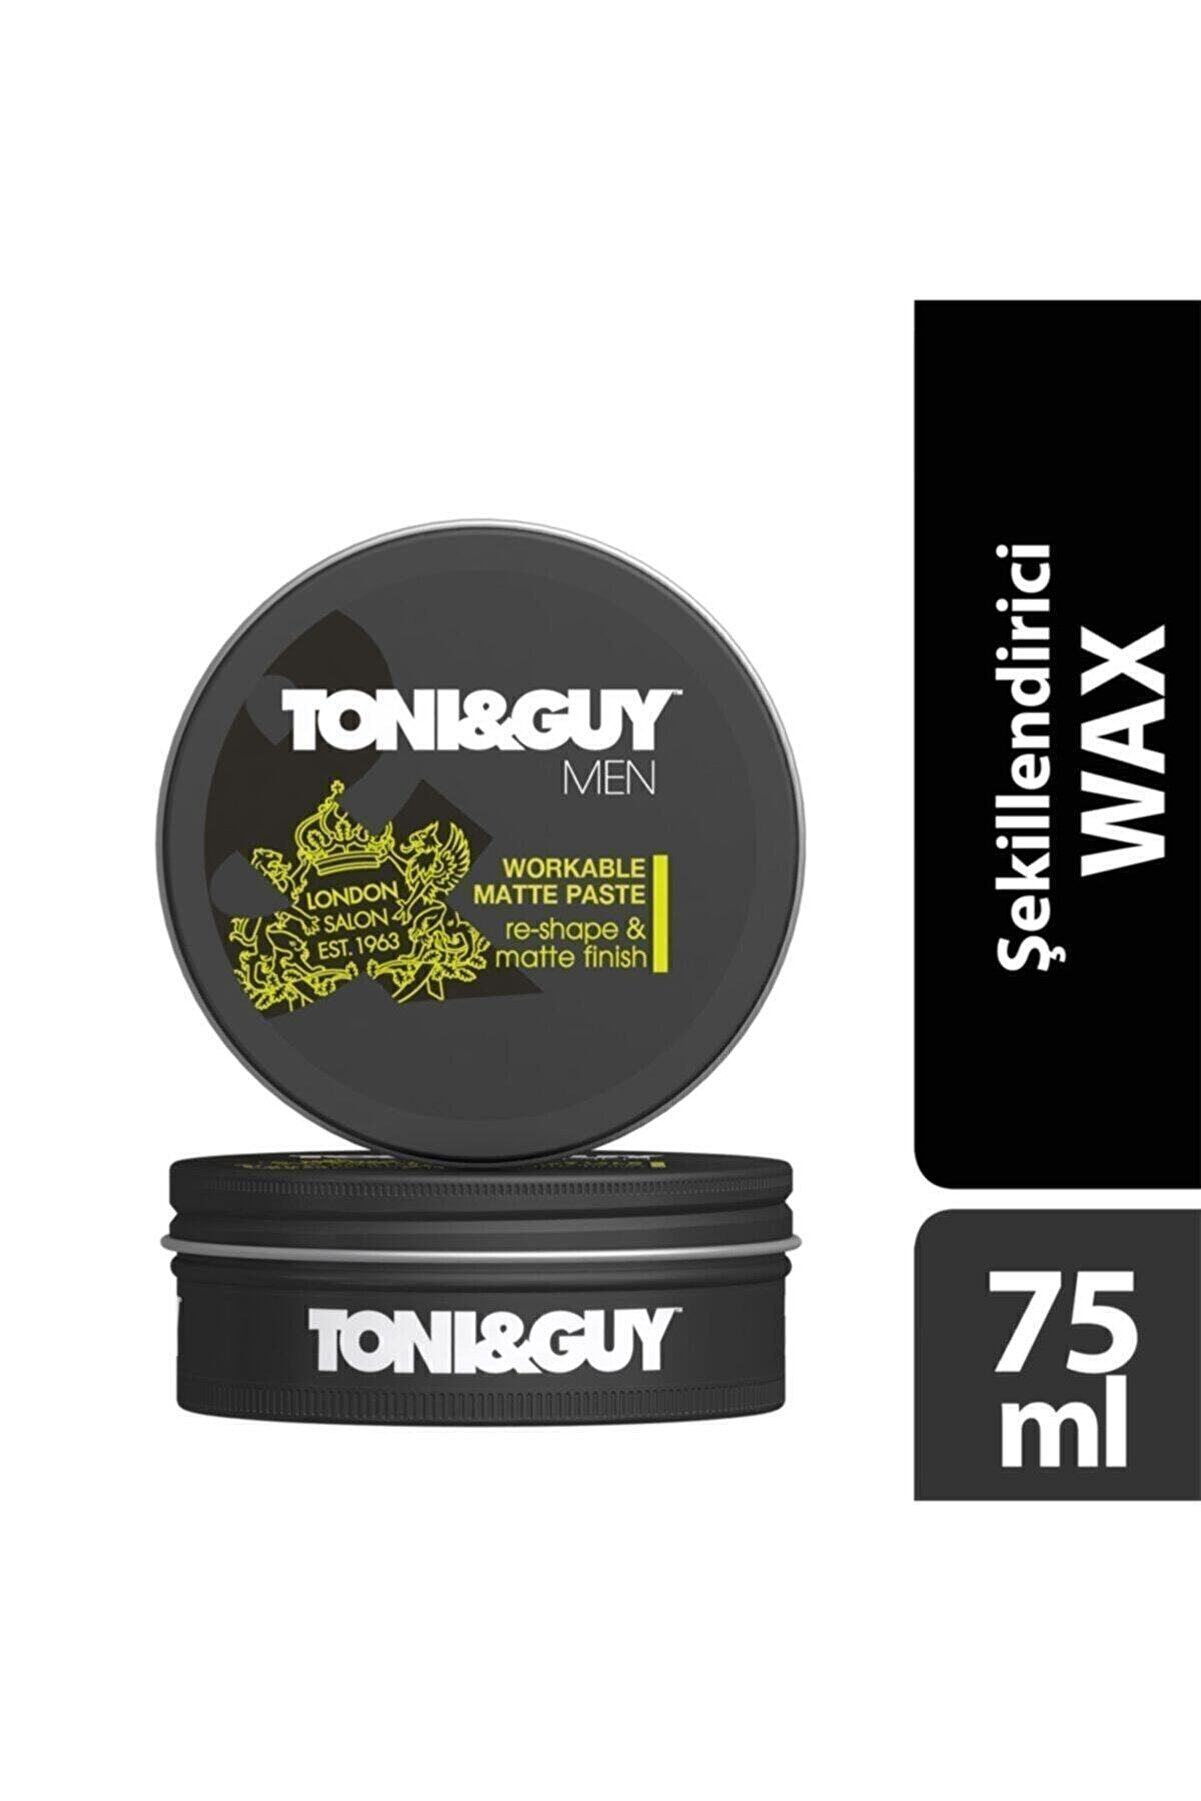 Toni Guy Wax Mat 75 ml